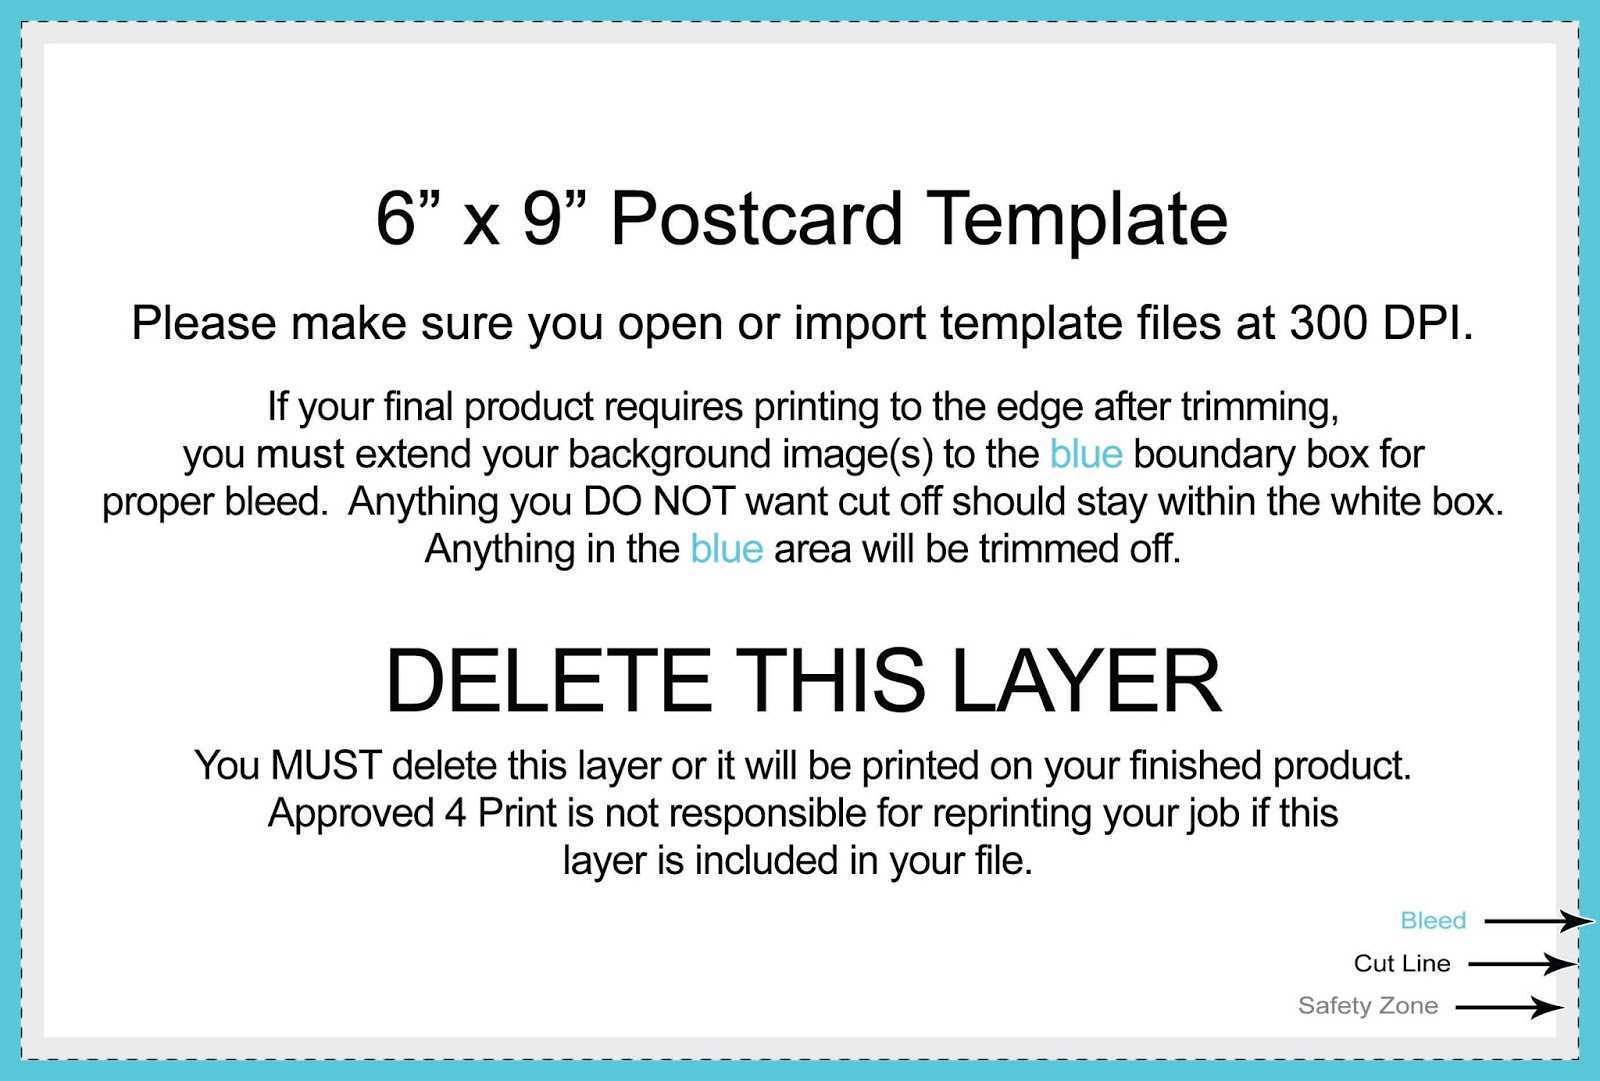 9X6 Postcard Template Cards Design Templates